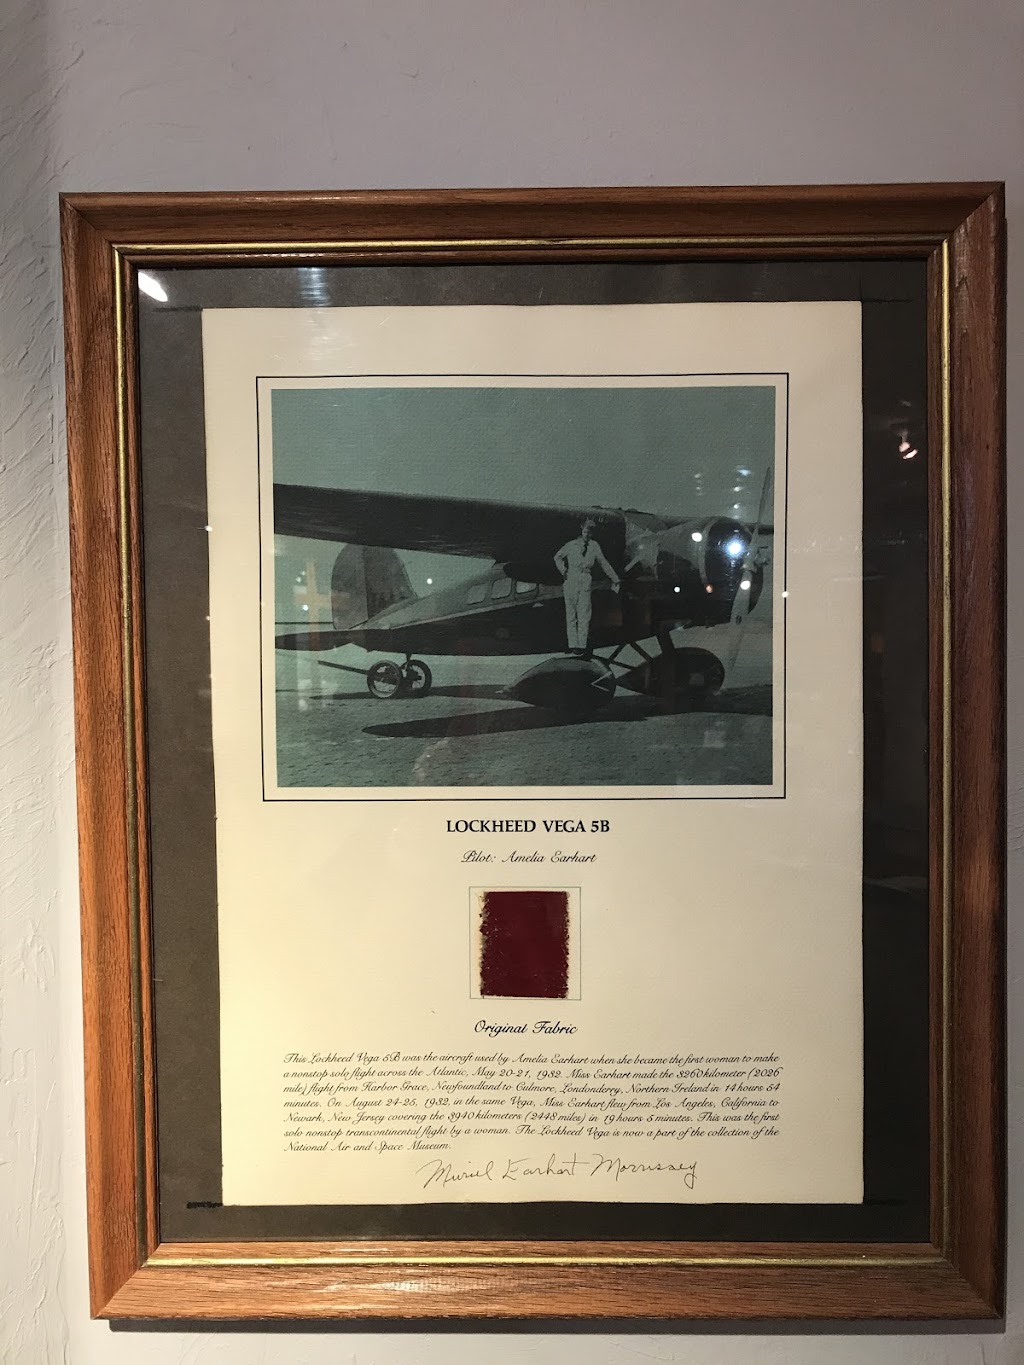 99s Museum of Women Pilots | 4300 Amelia Earhart Ln, Oklahoma City, OK 73159 | Phone: (405) 685-9990